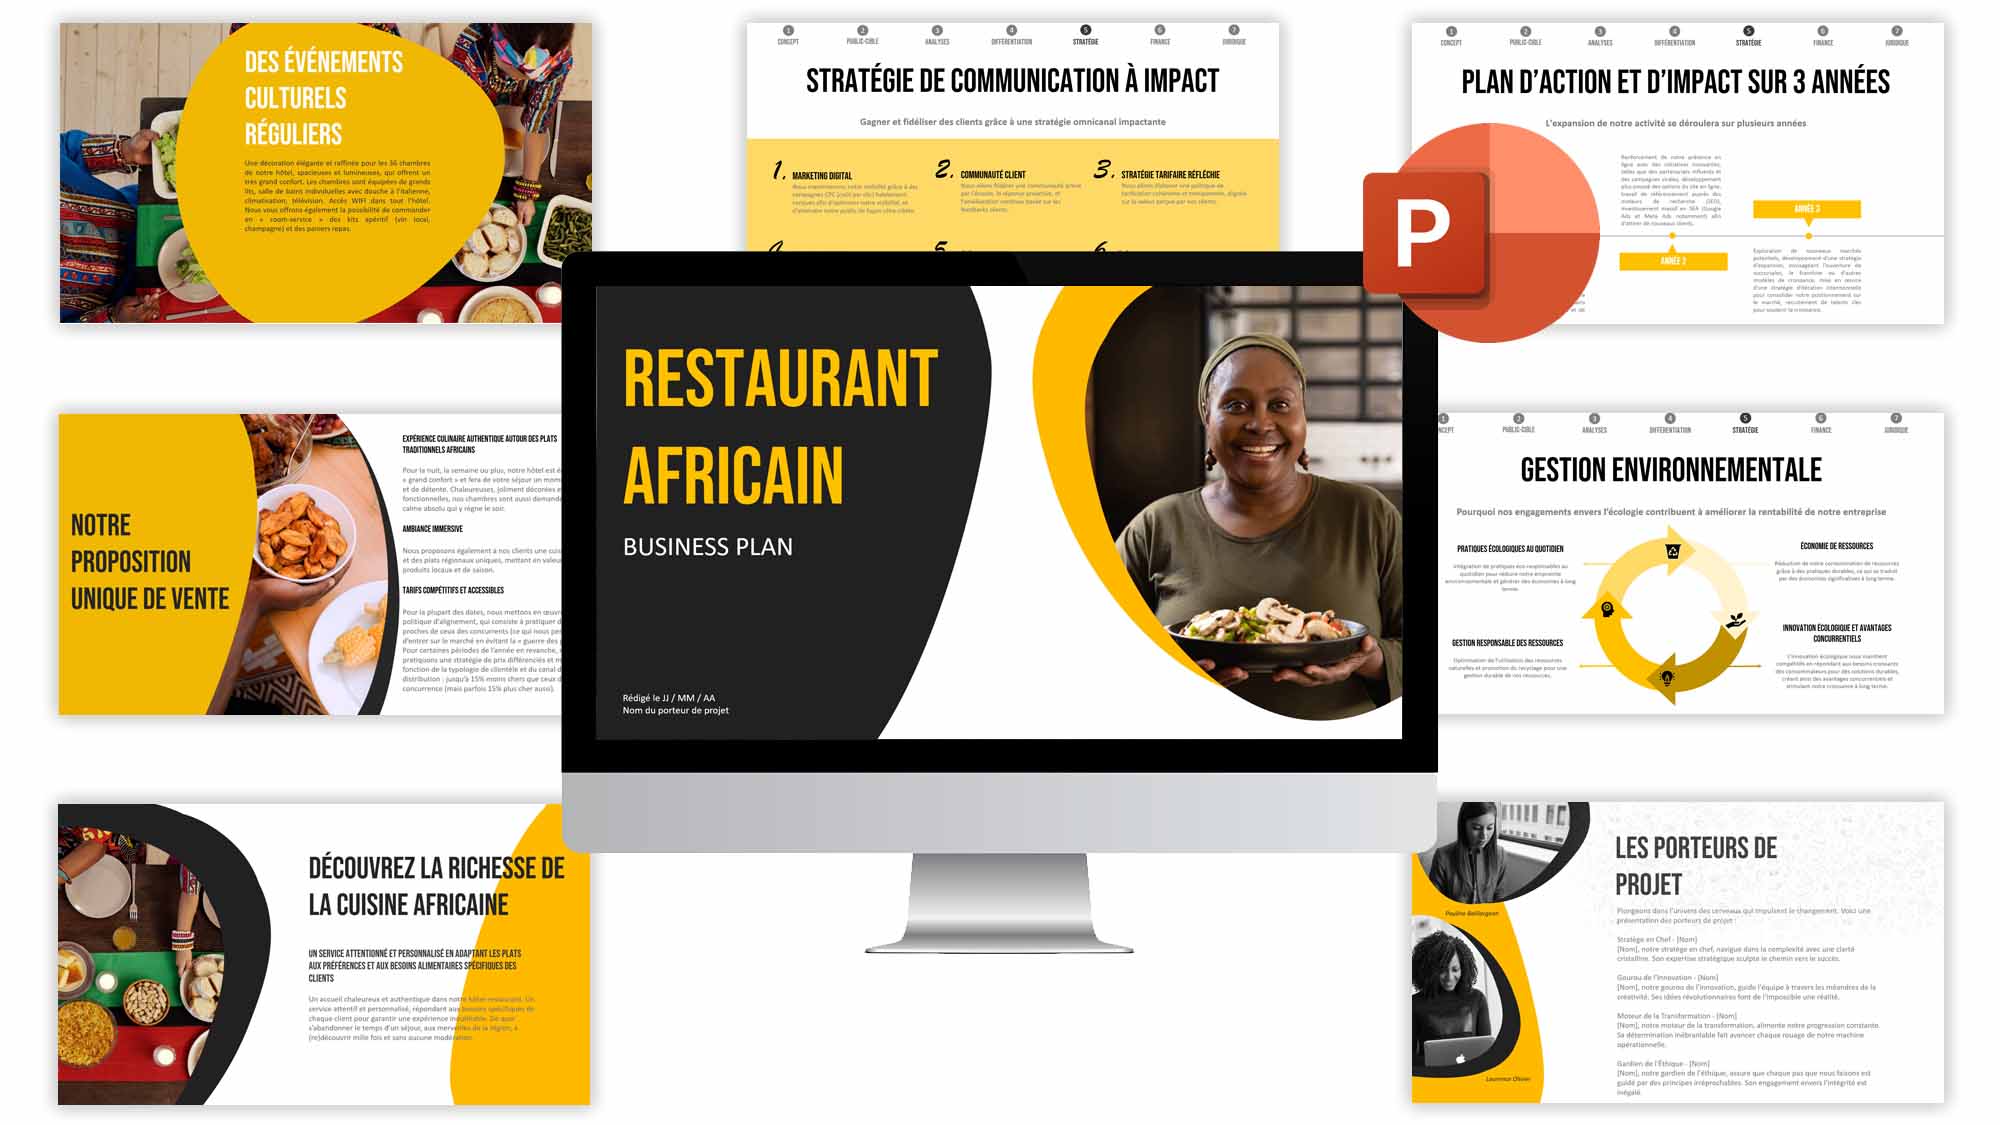 business plan restaurant africain